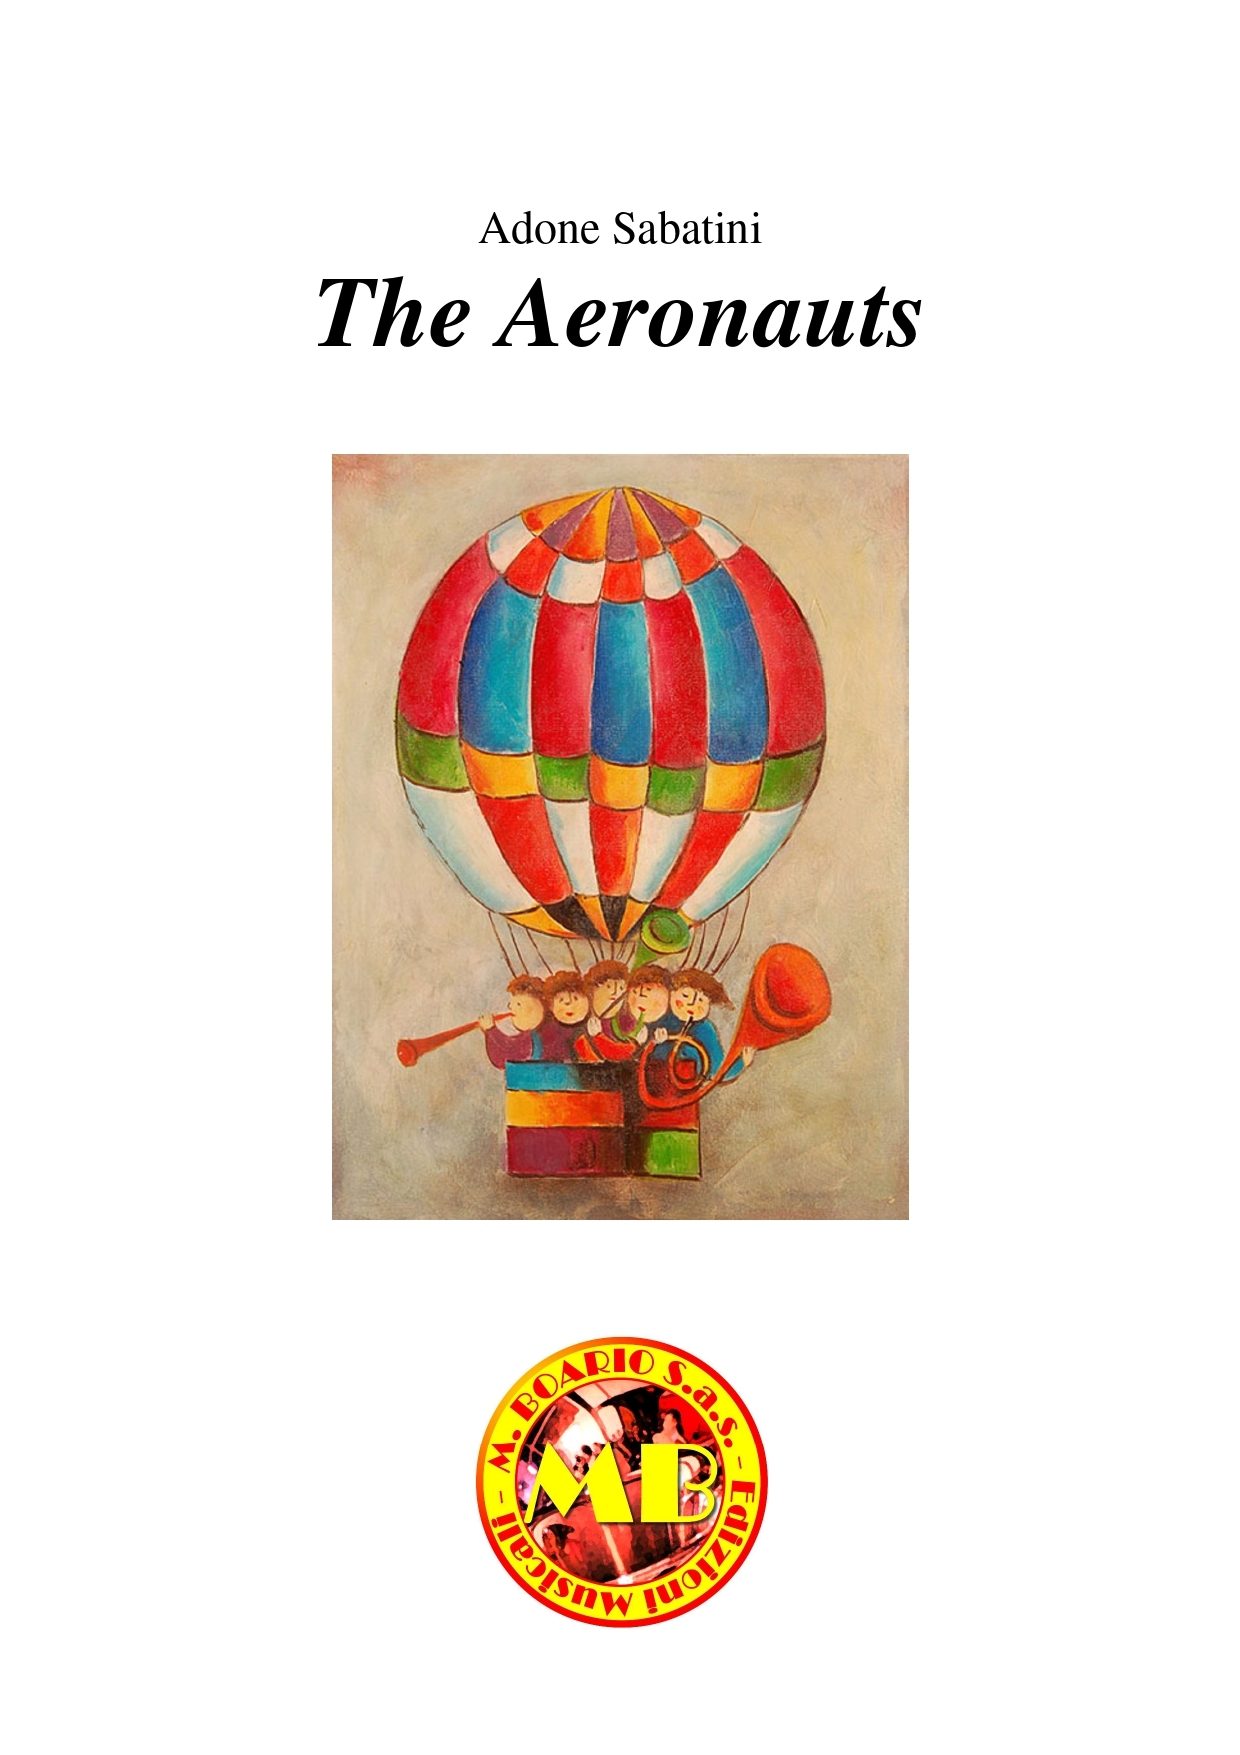 copertina_The_Aeronauts_page-0001_1